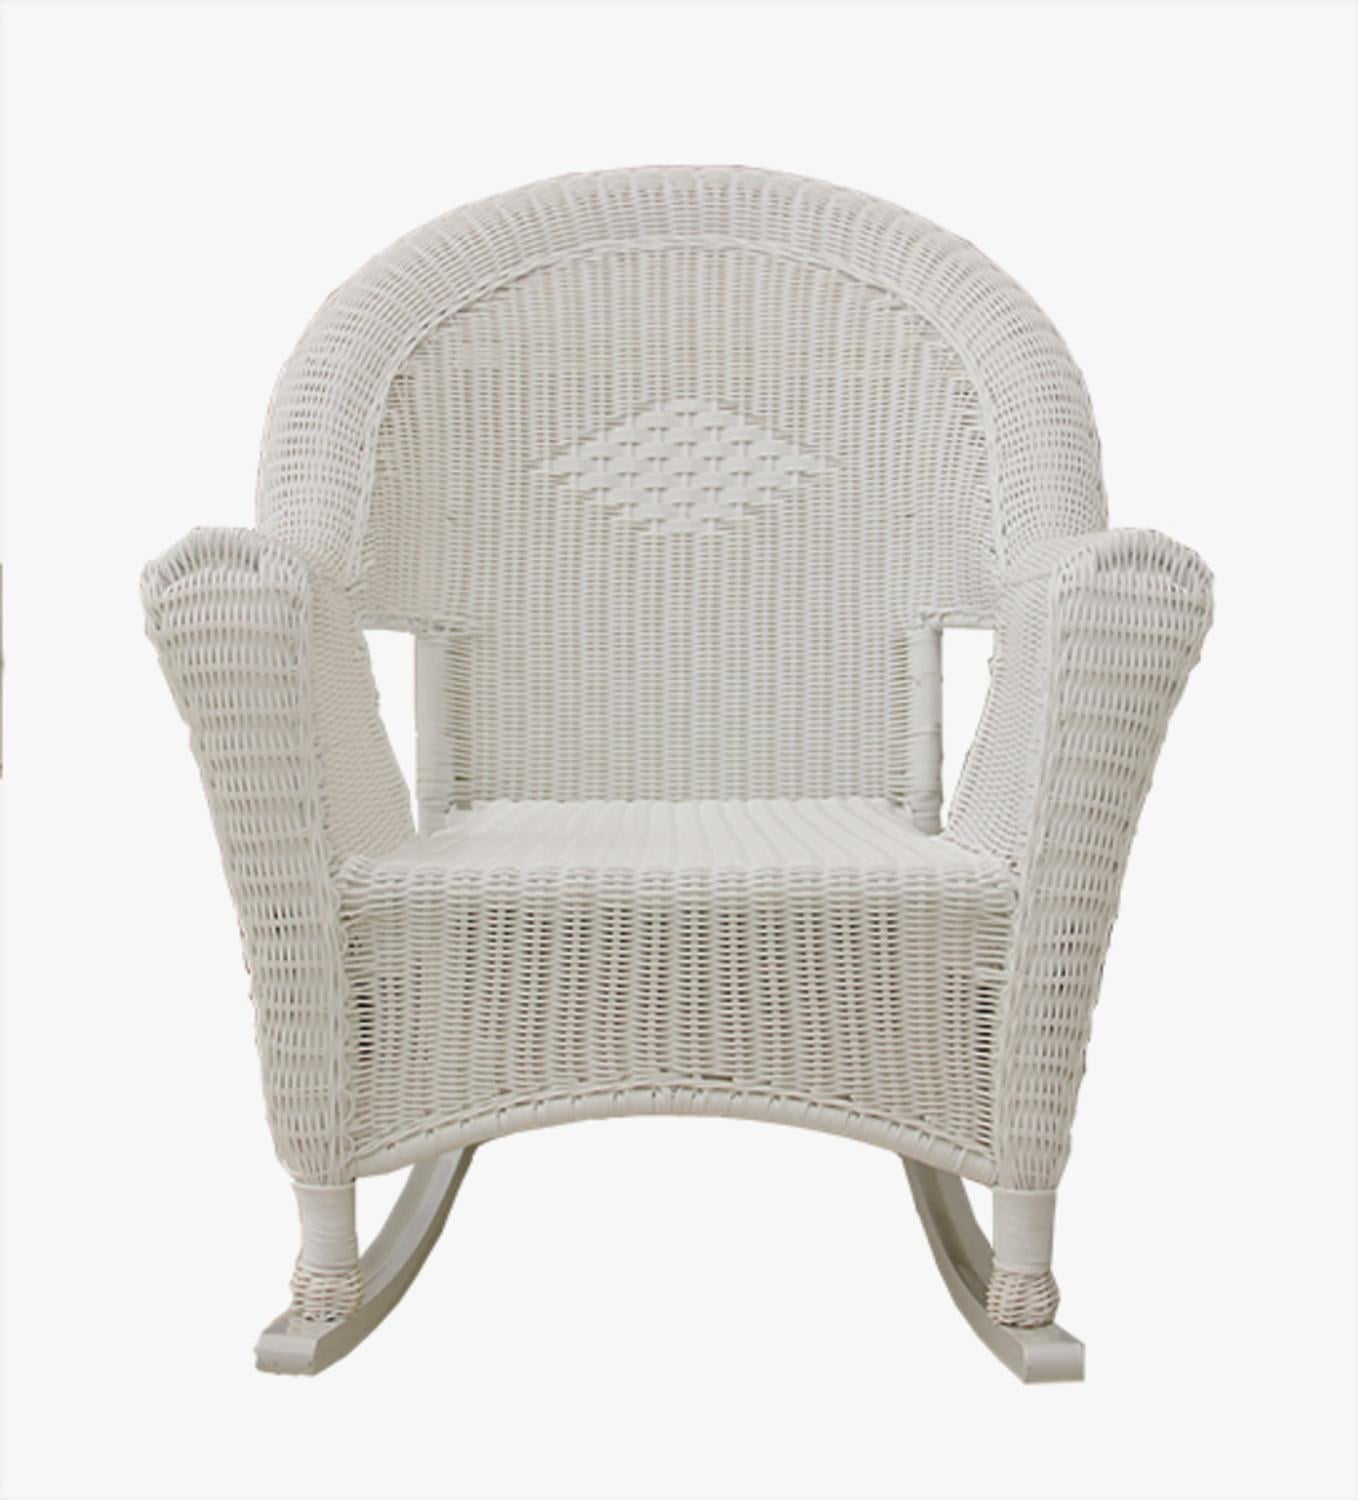 White Resin Wicker Rocking Chair Patio Furniture Walmartcom Walmartcom